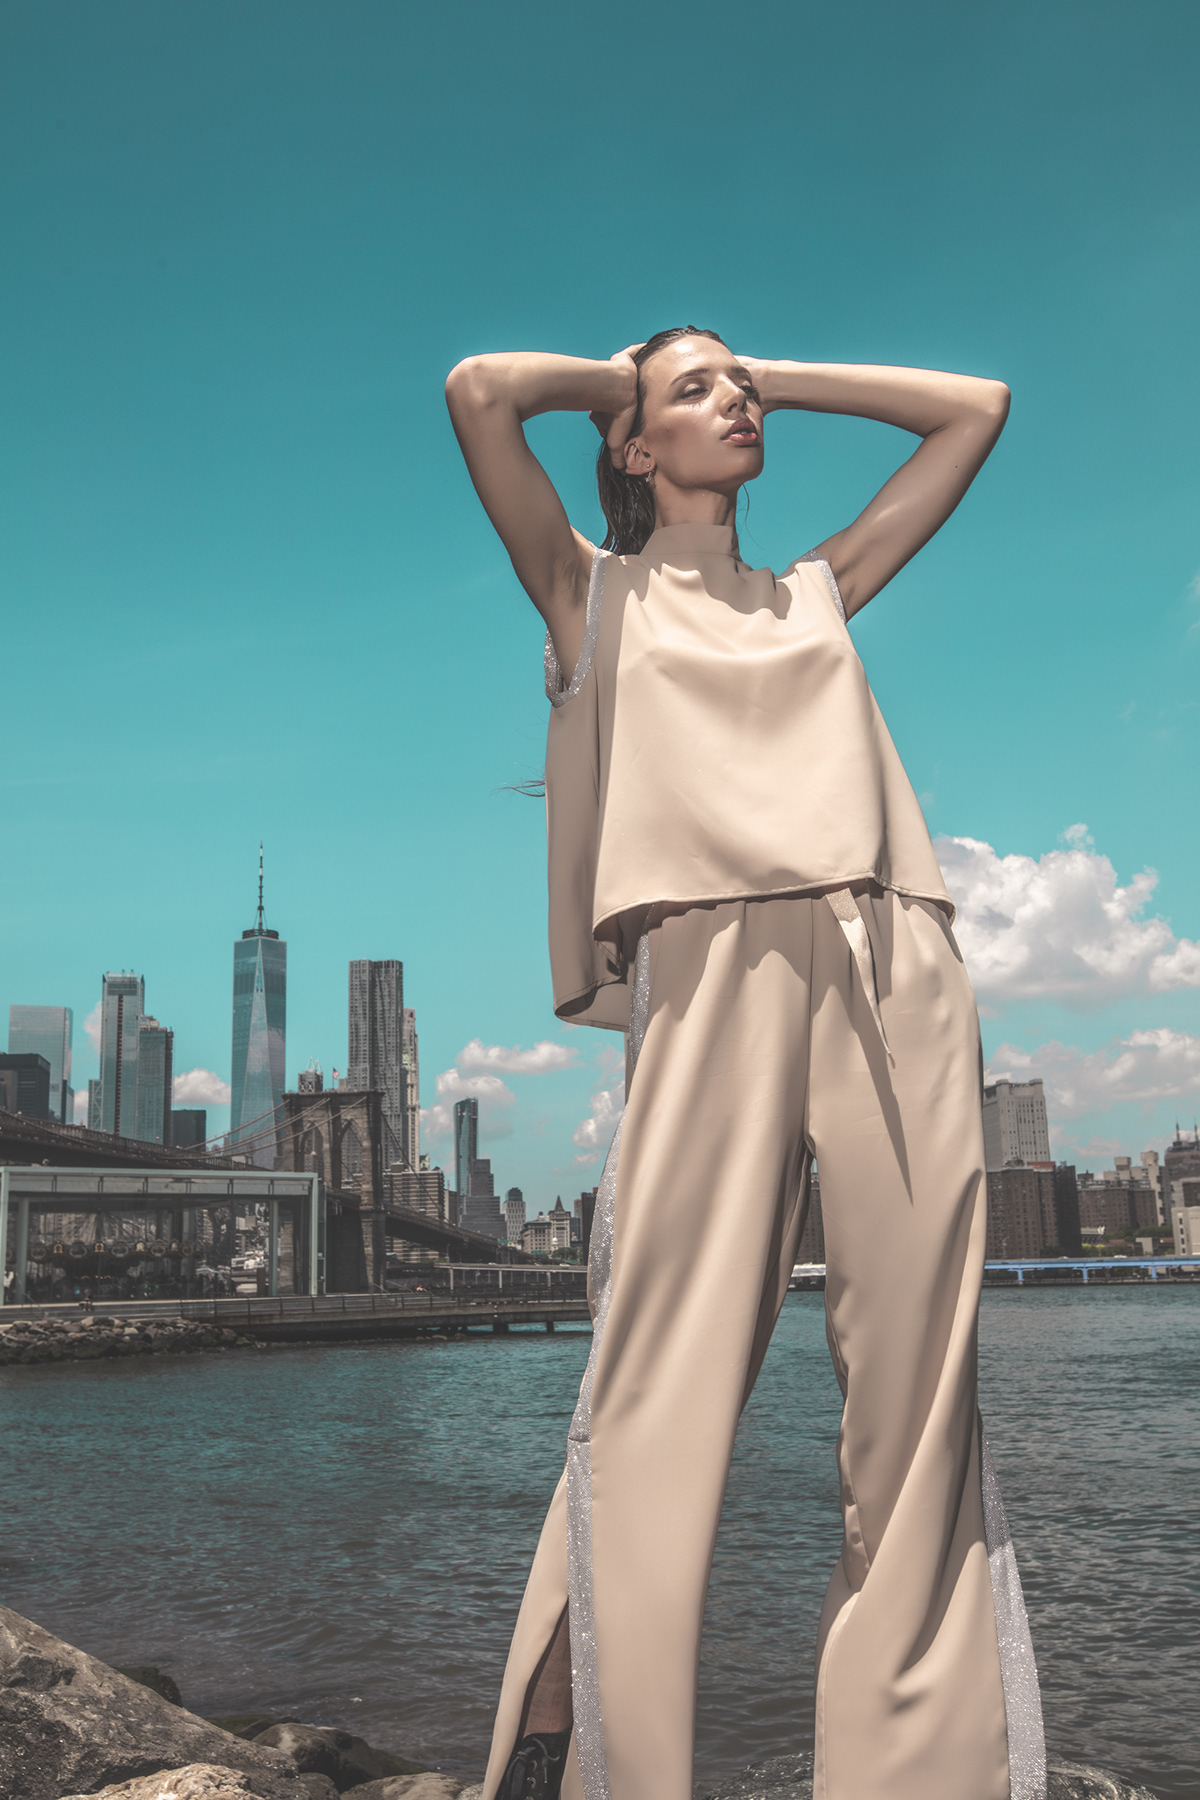 nyc Dumbo Brooklyn Fashion  luxury artistic high fashion editorial ad campaign